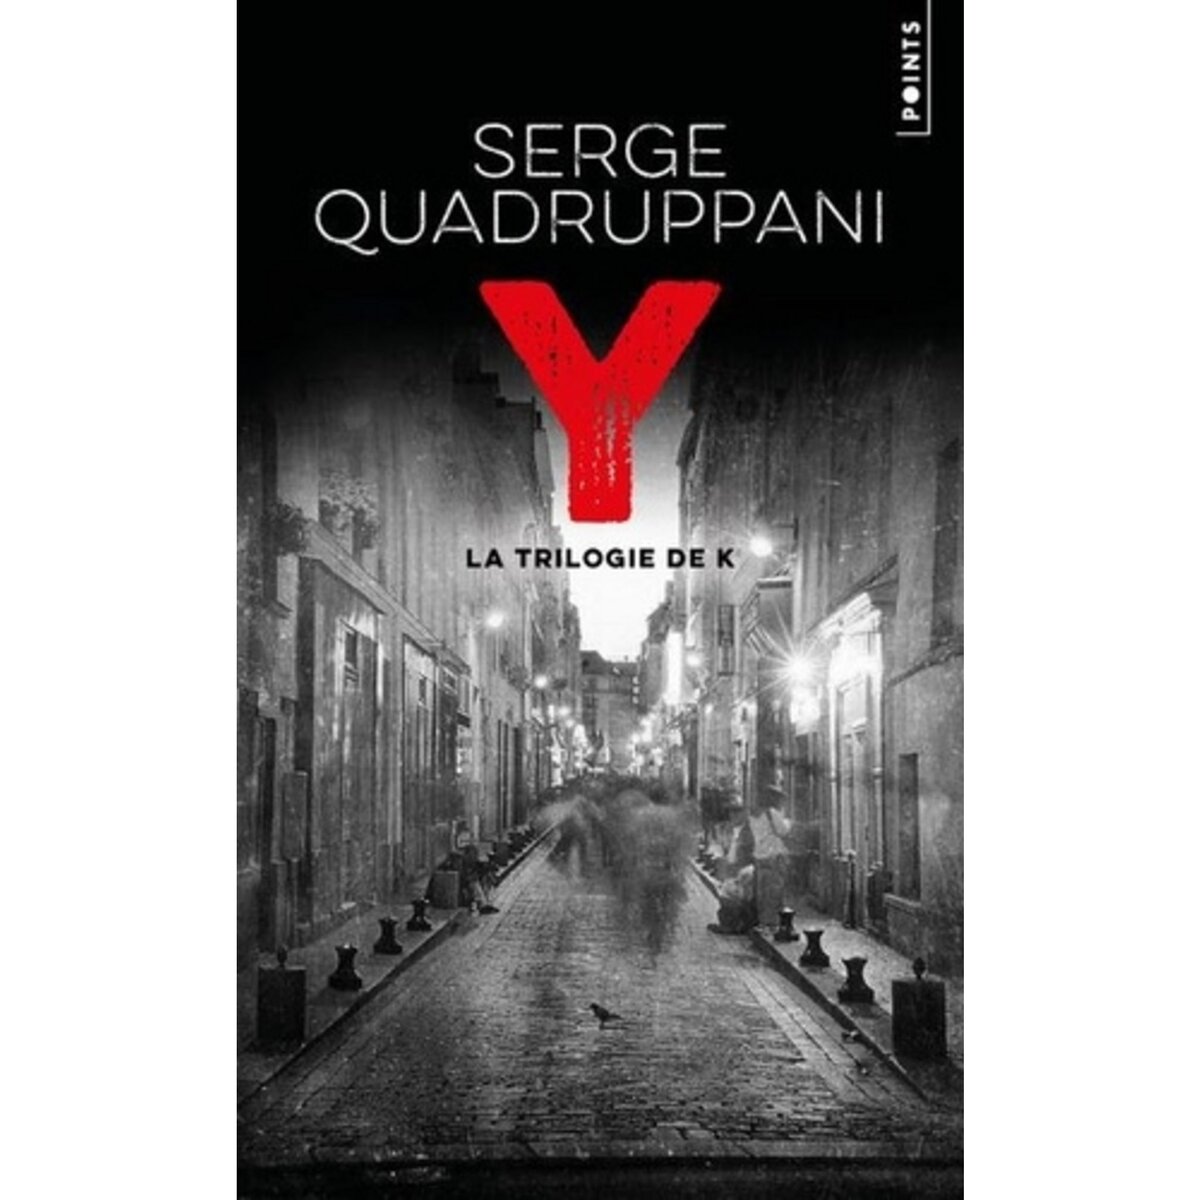  Y. LA TRILOGIE DE K, Quadruppani Serge